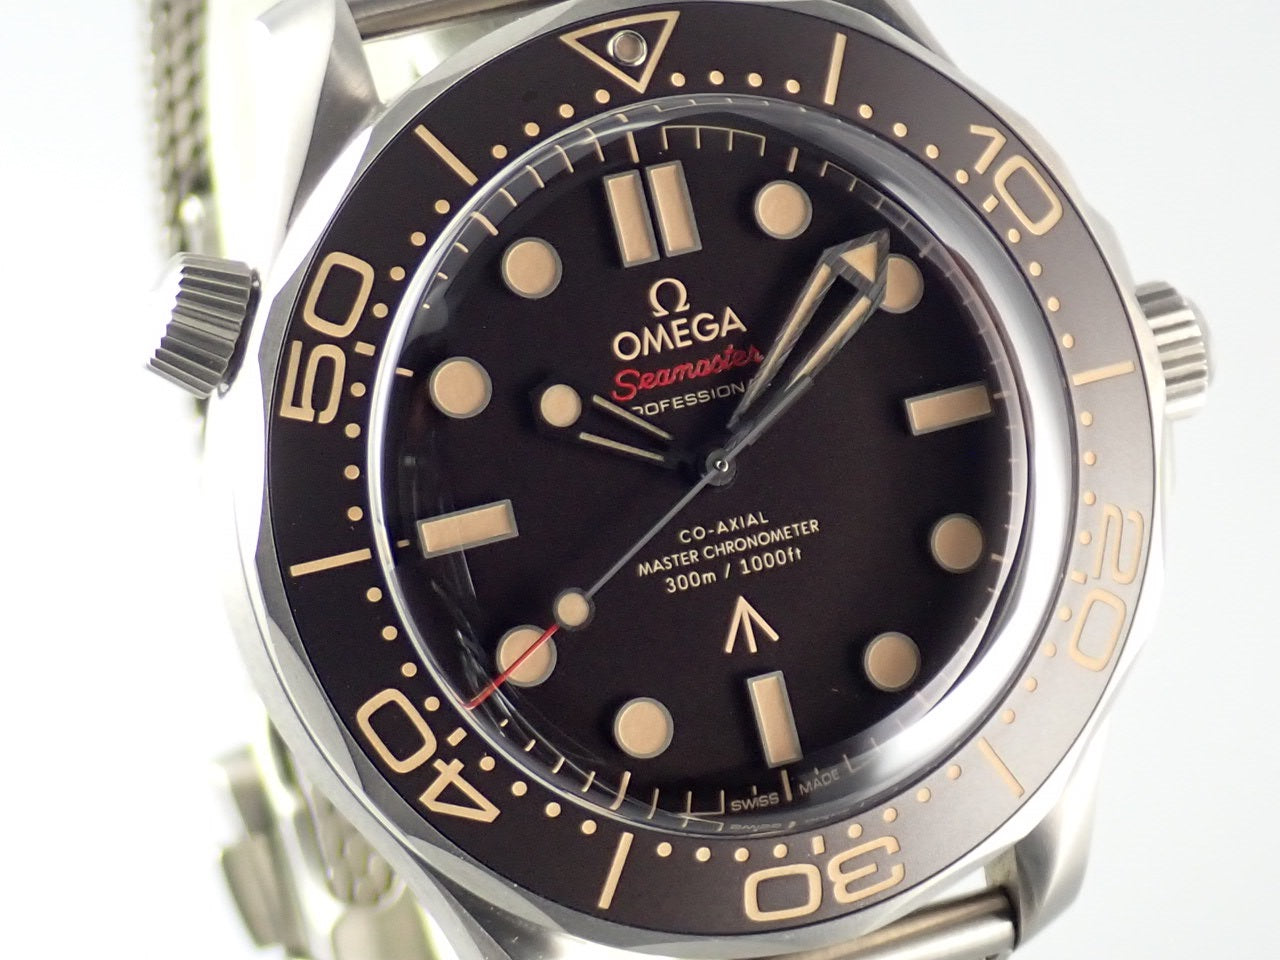 Omega Seamaster 300 Co-Axial Master Chronometer 007 &lt;Warranty, Box, etc.&gt;